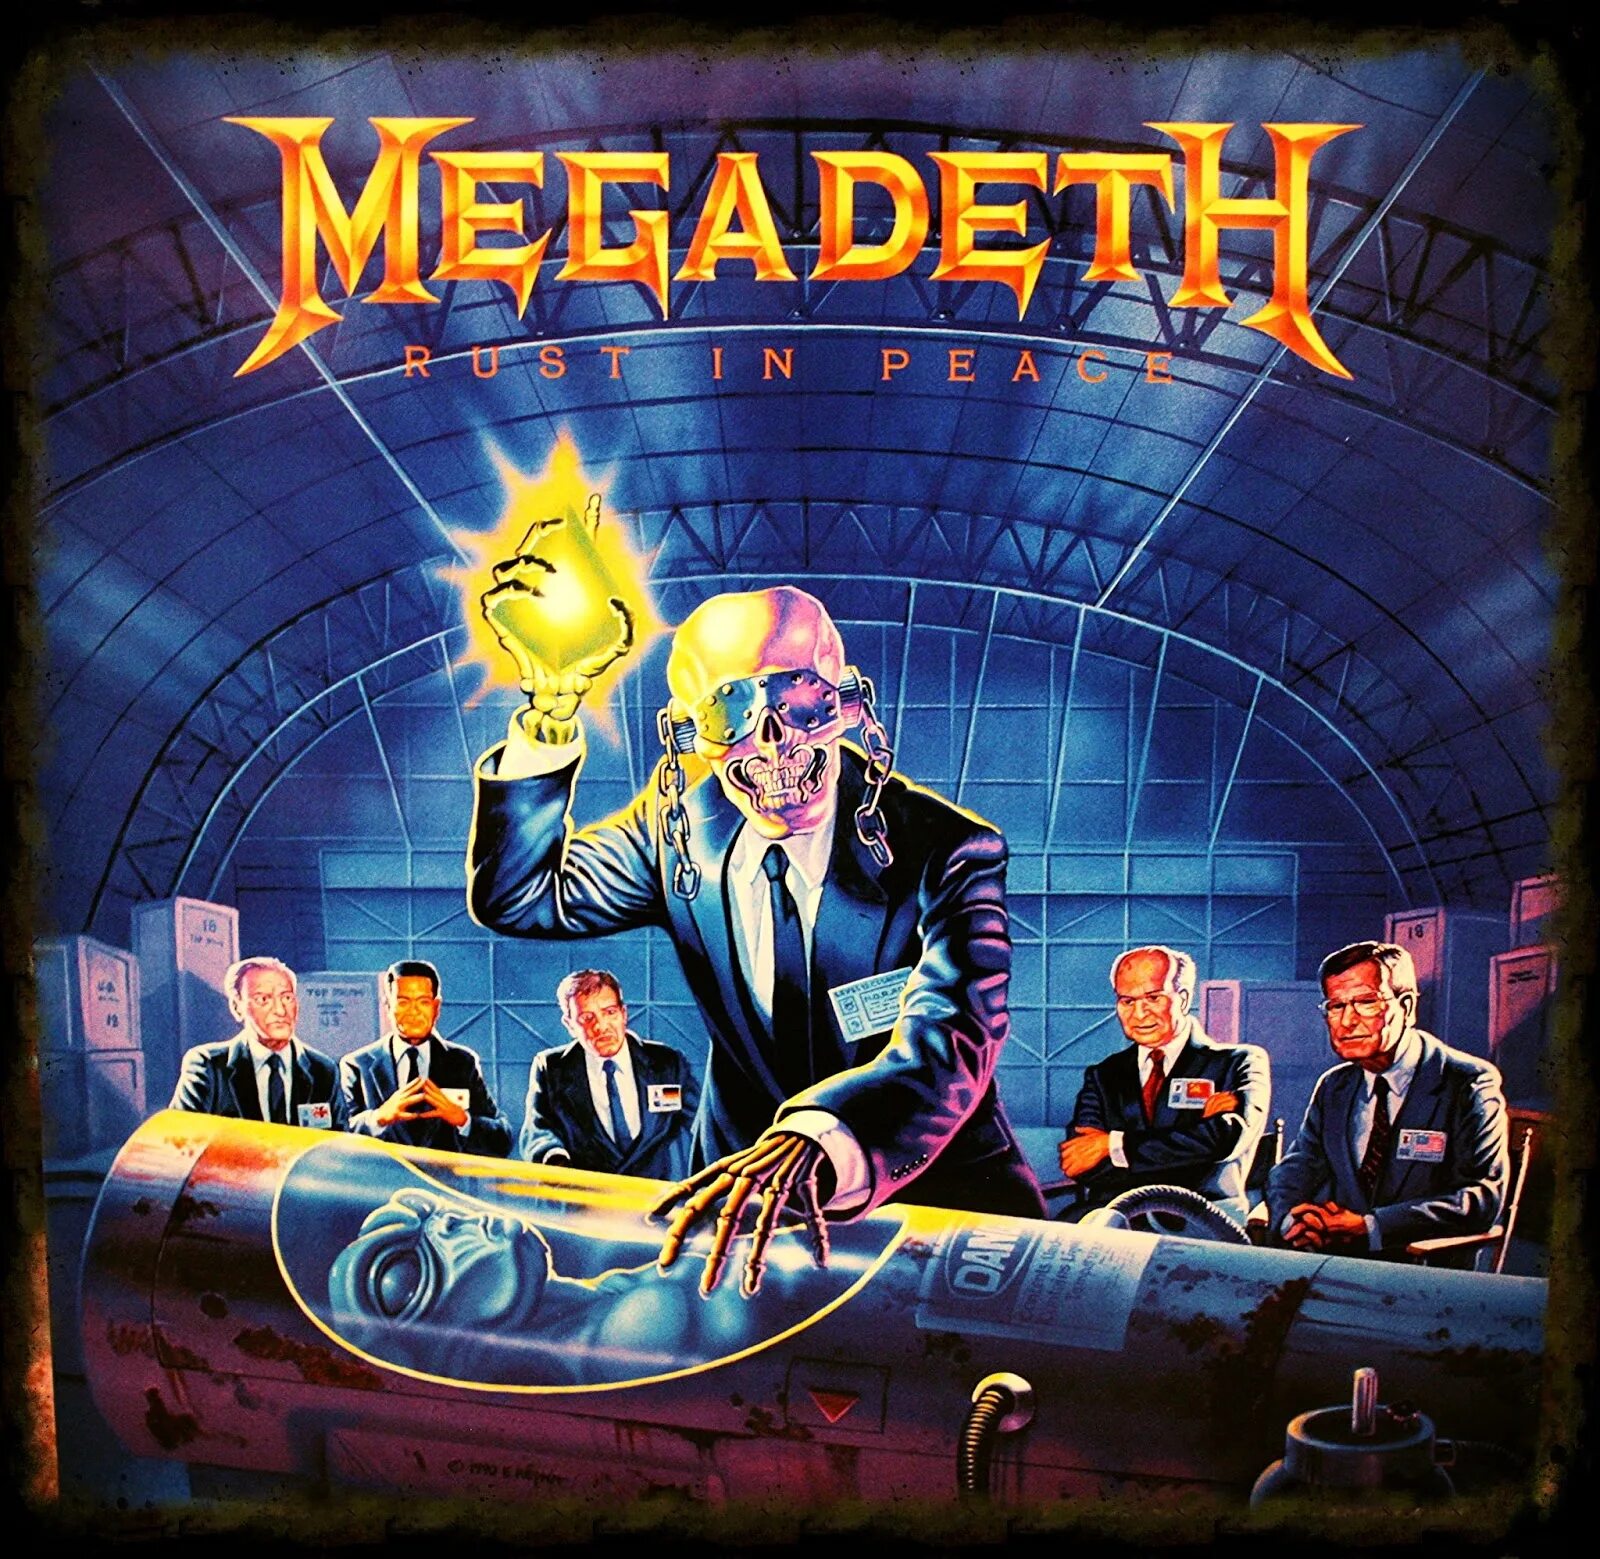 The system has failed. Megadeth обложки. Группа Megadeth обложки. Megadeth Rust in Peace обложка. Megadeth Peace sells обложка.